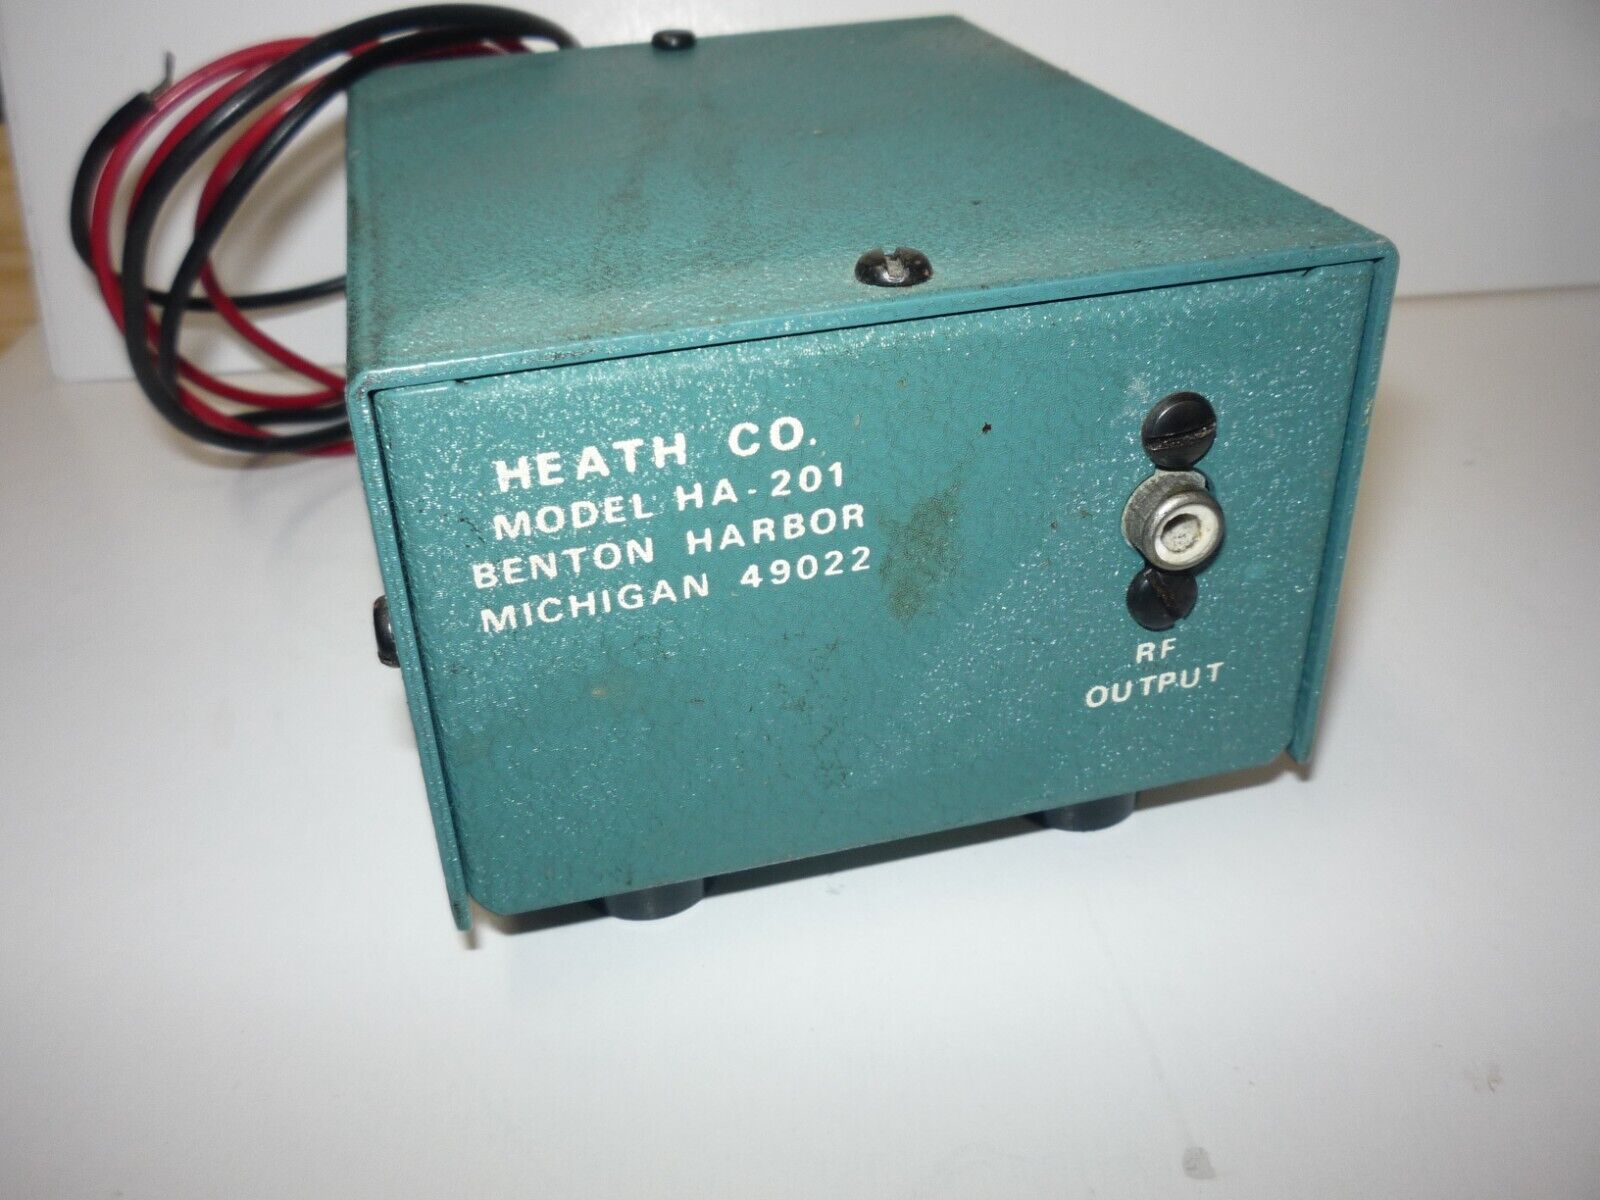 Heath Company / Heathkit 2 Meter Amplifier Model HA-201A - w/ Cord - Untested